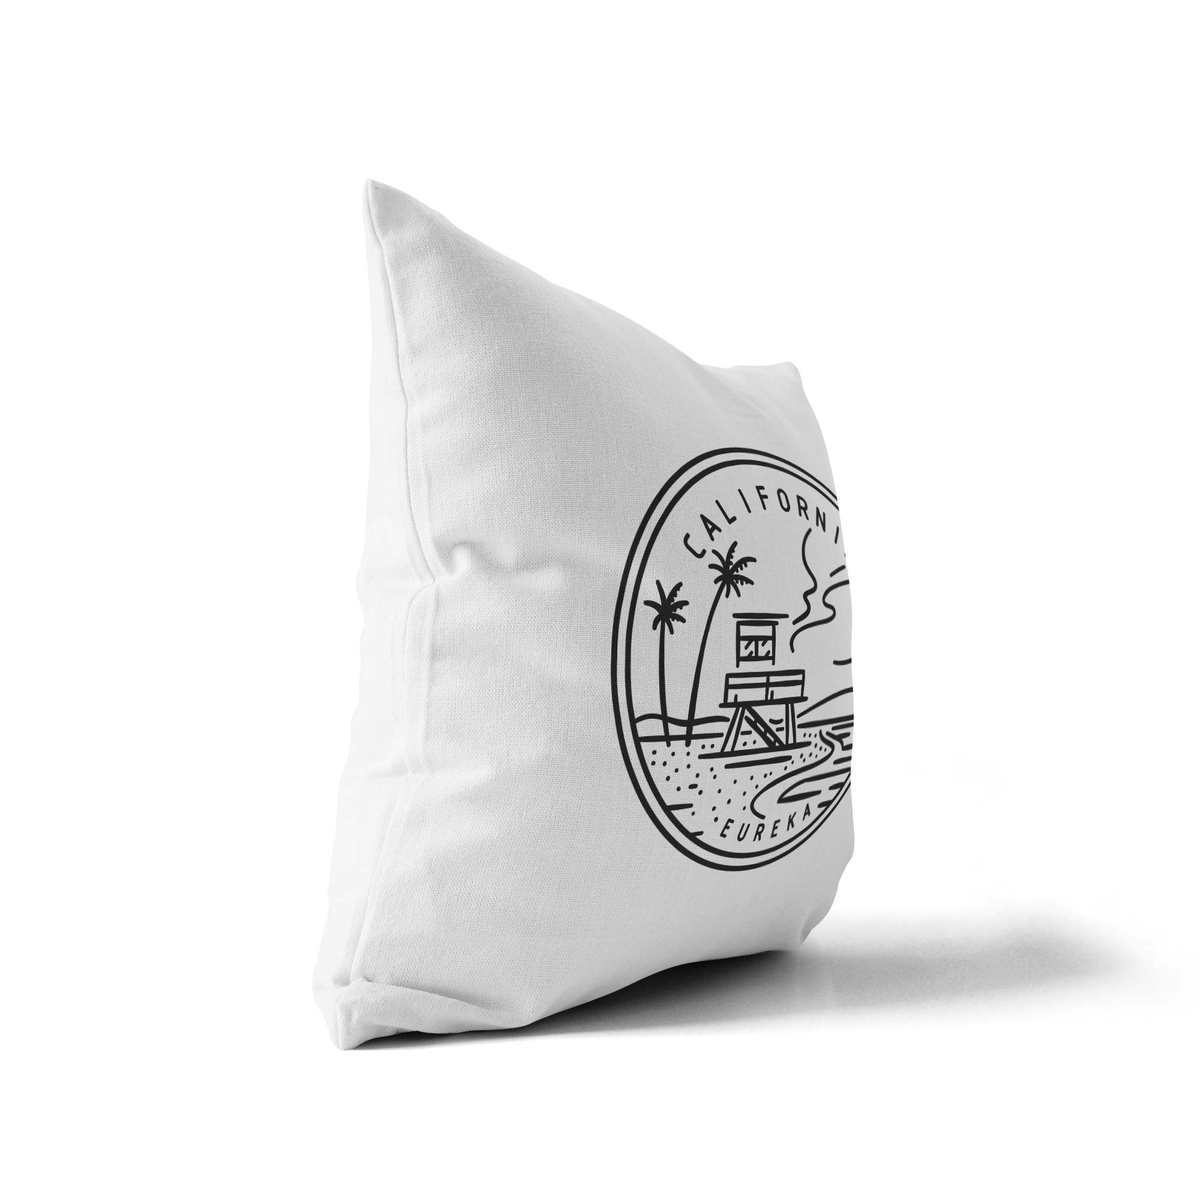 California State Crest Velveteen Throw Pillow - Point Two Design